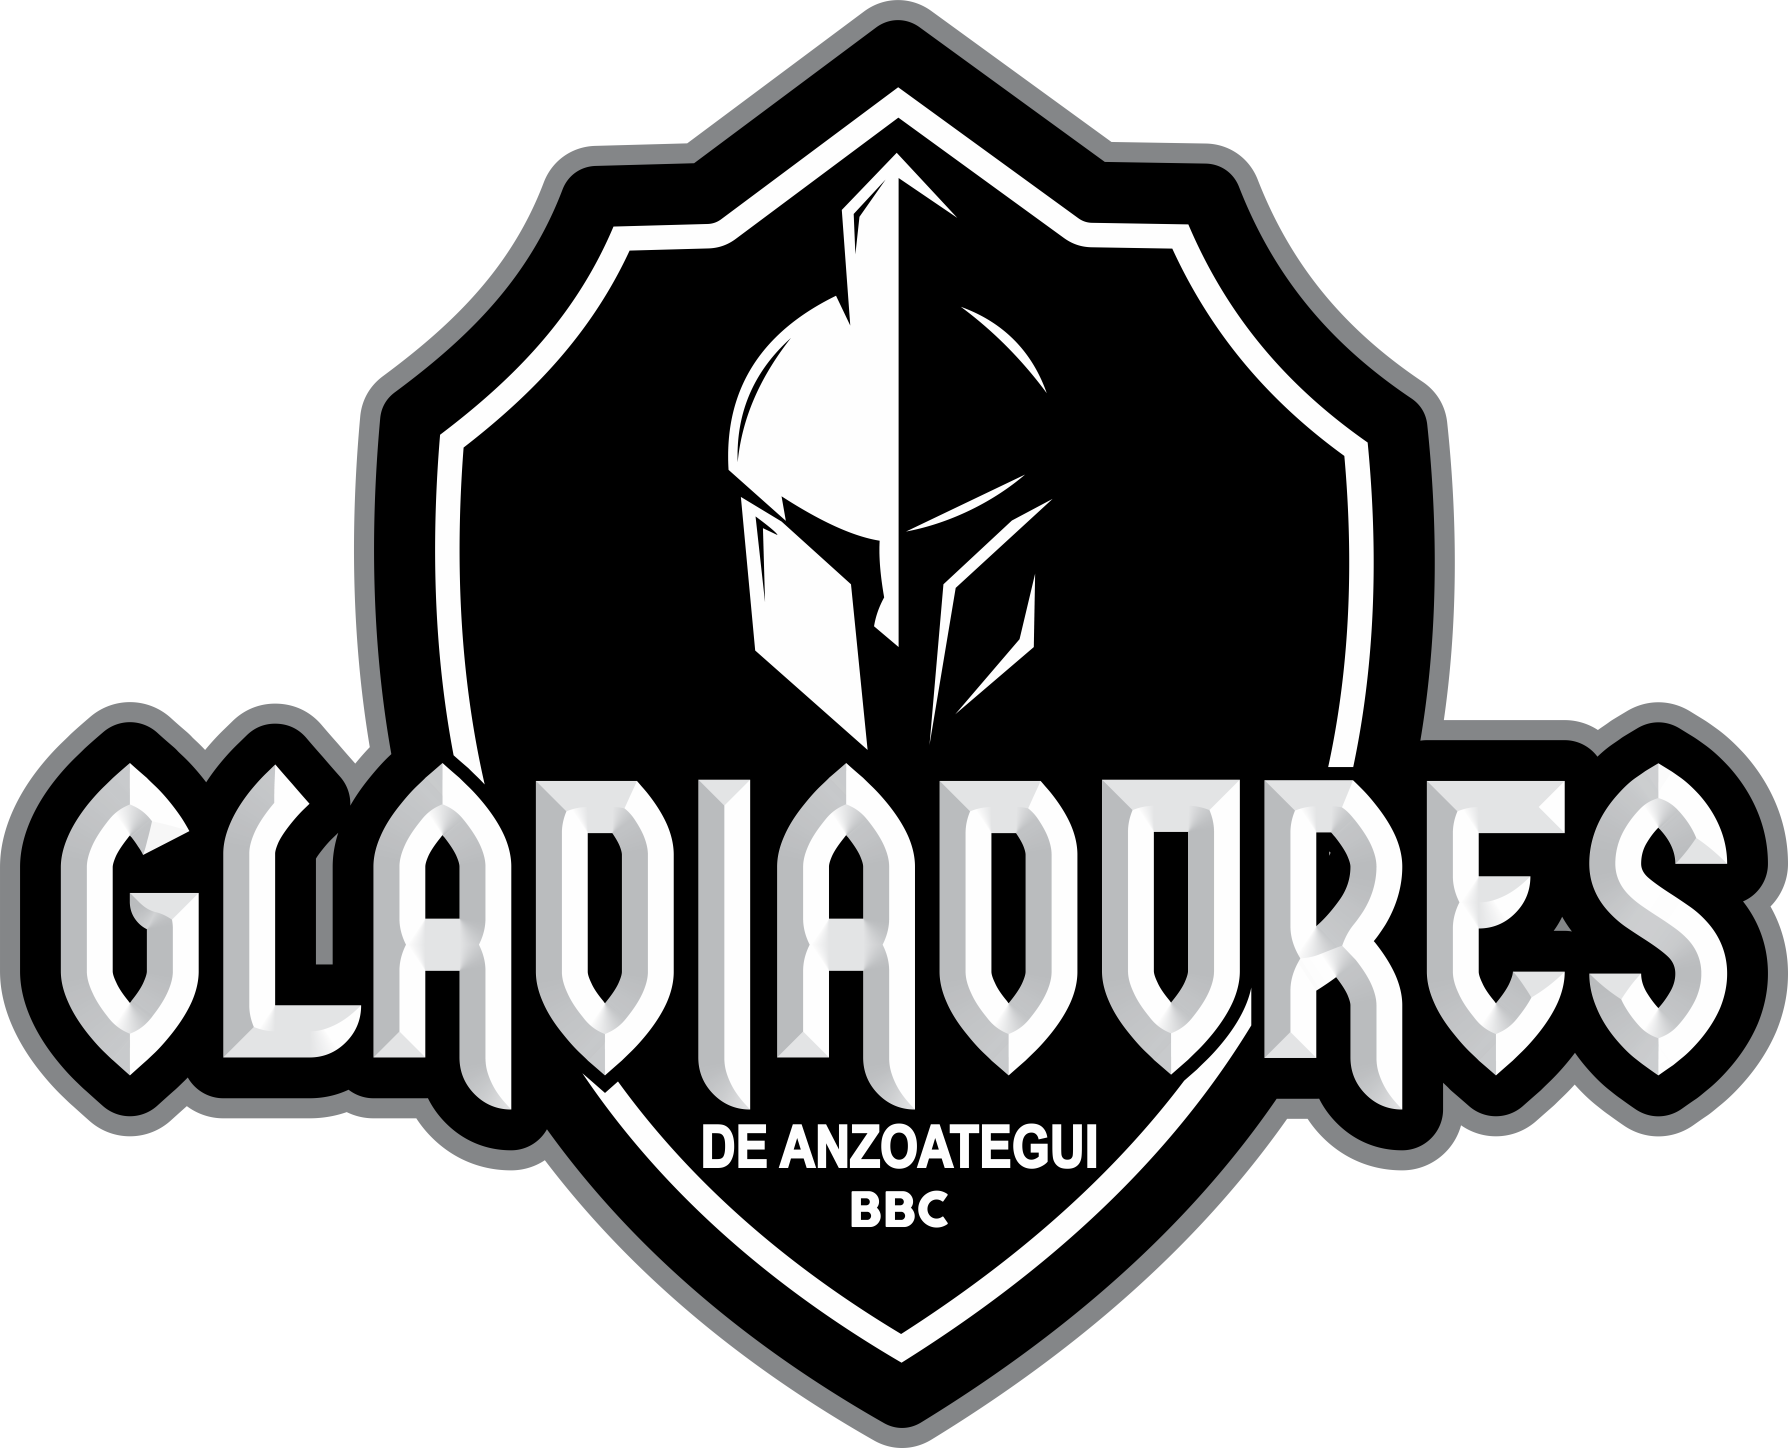 Gladiadores de Anzoategui